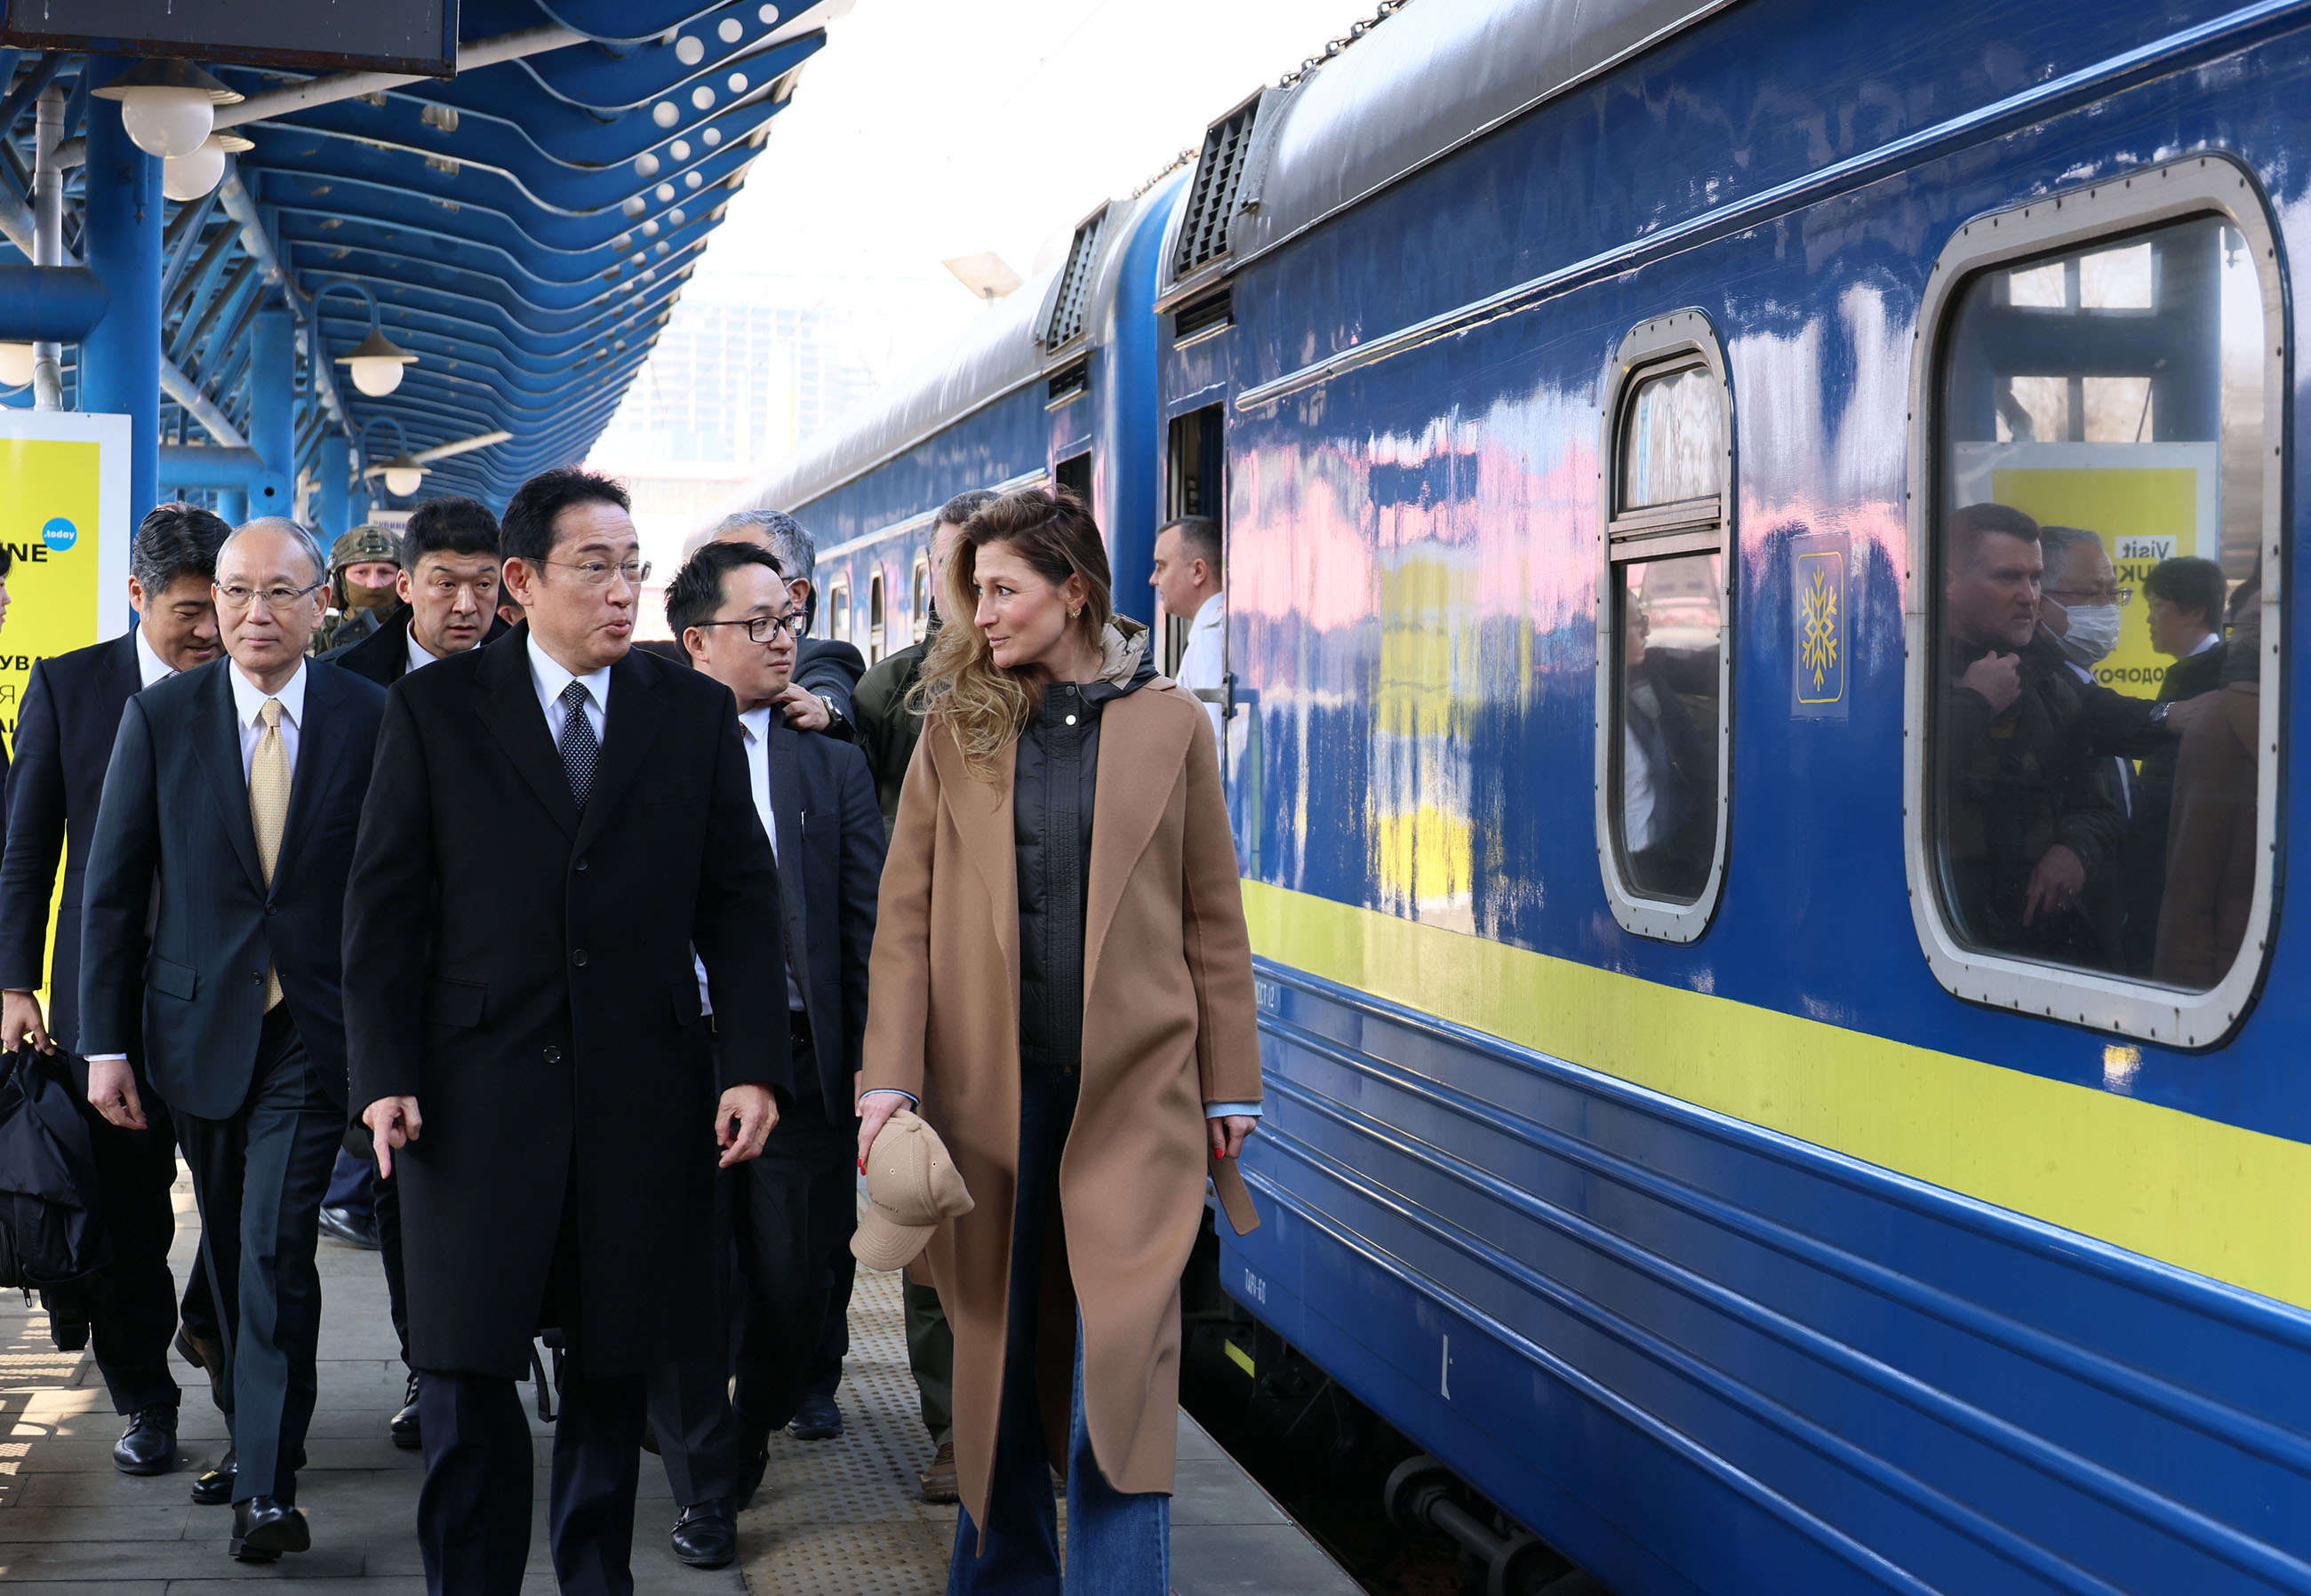 Prime Minister Kishida arriving in Kyiv